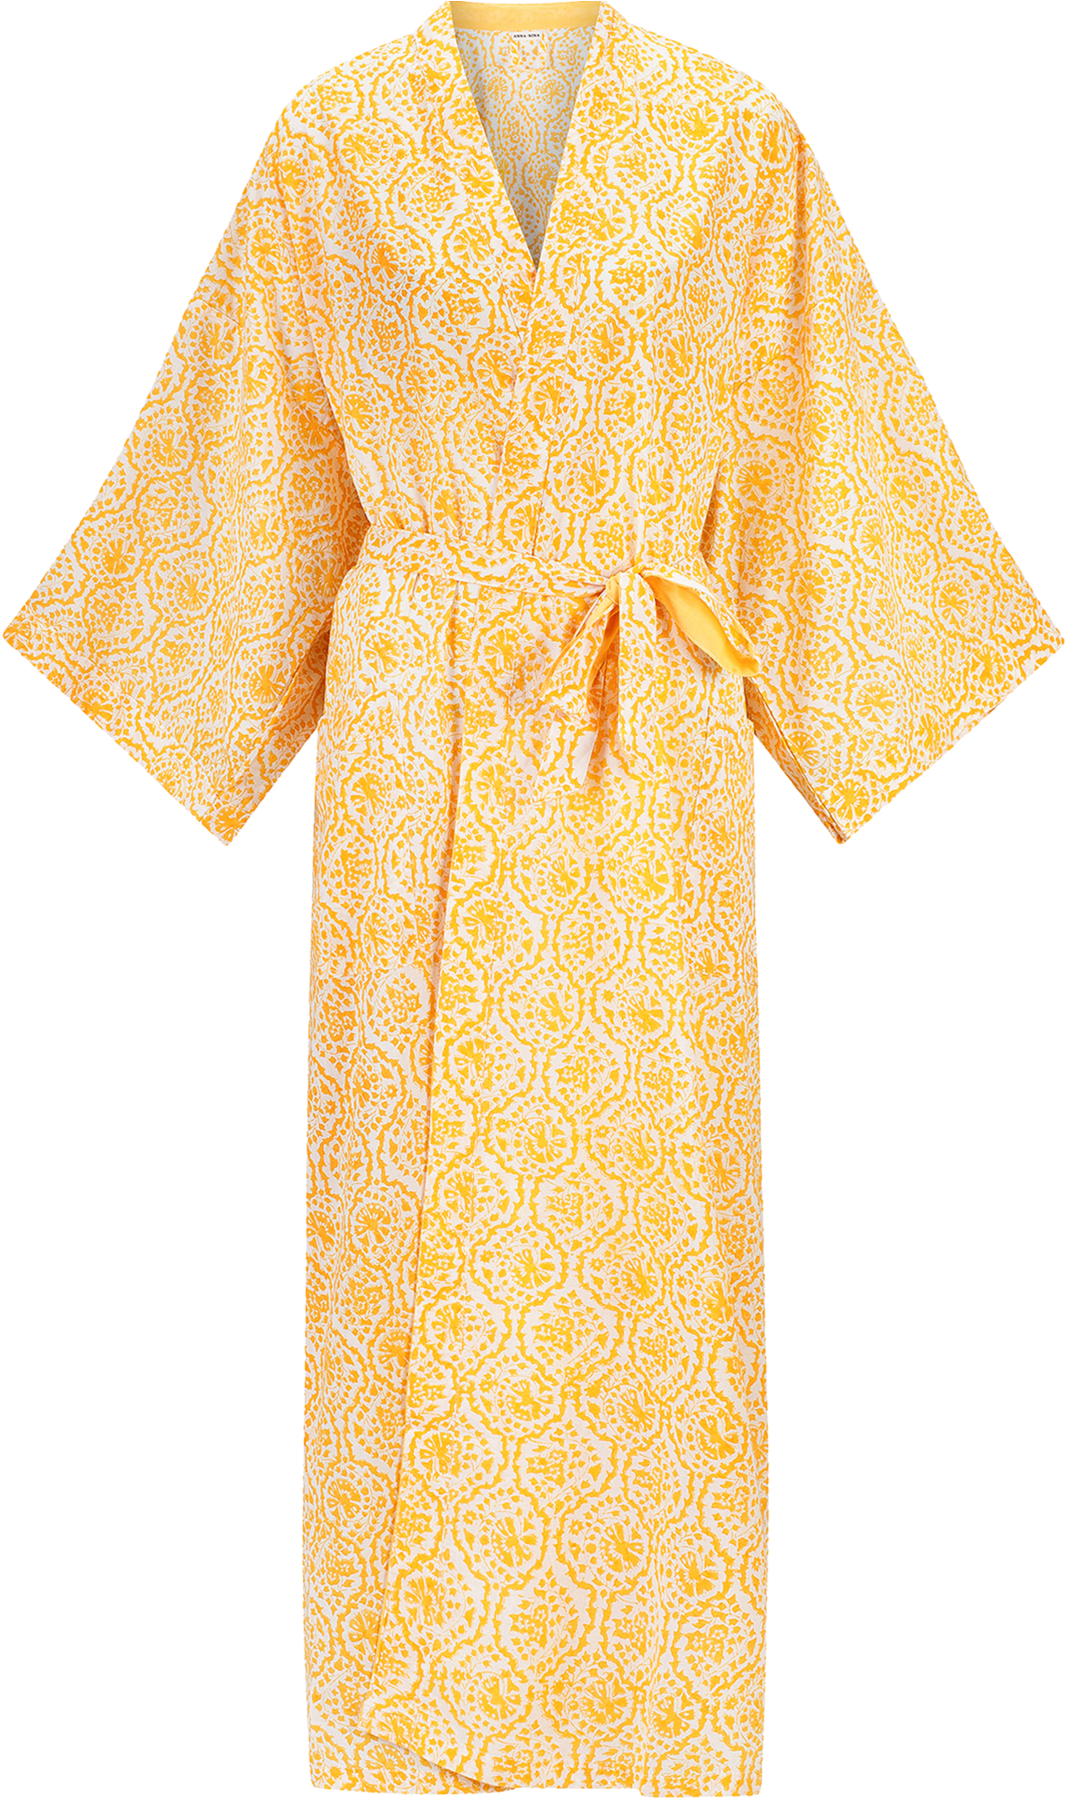 Kimono PNG Photo Clip Art Image